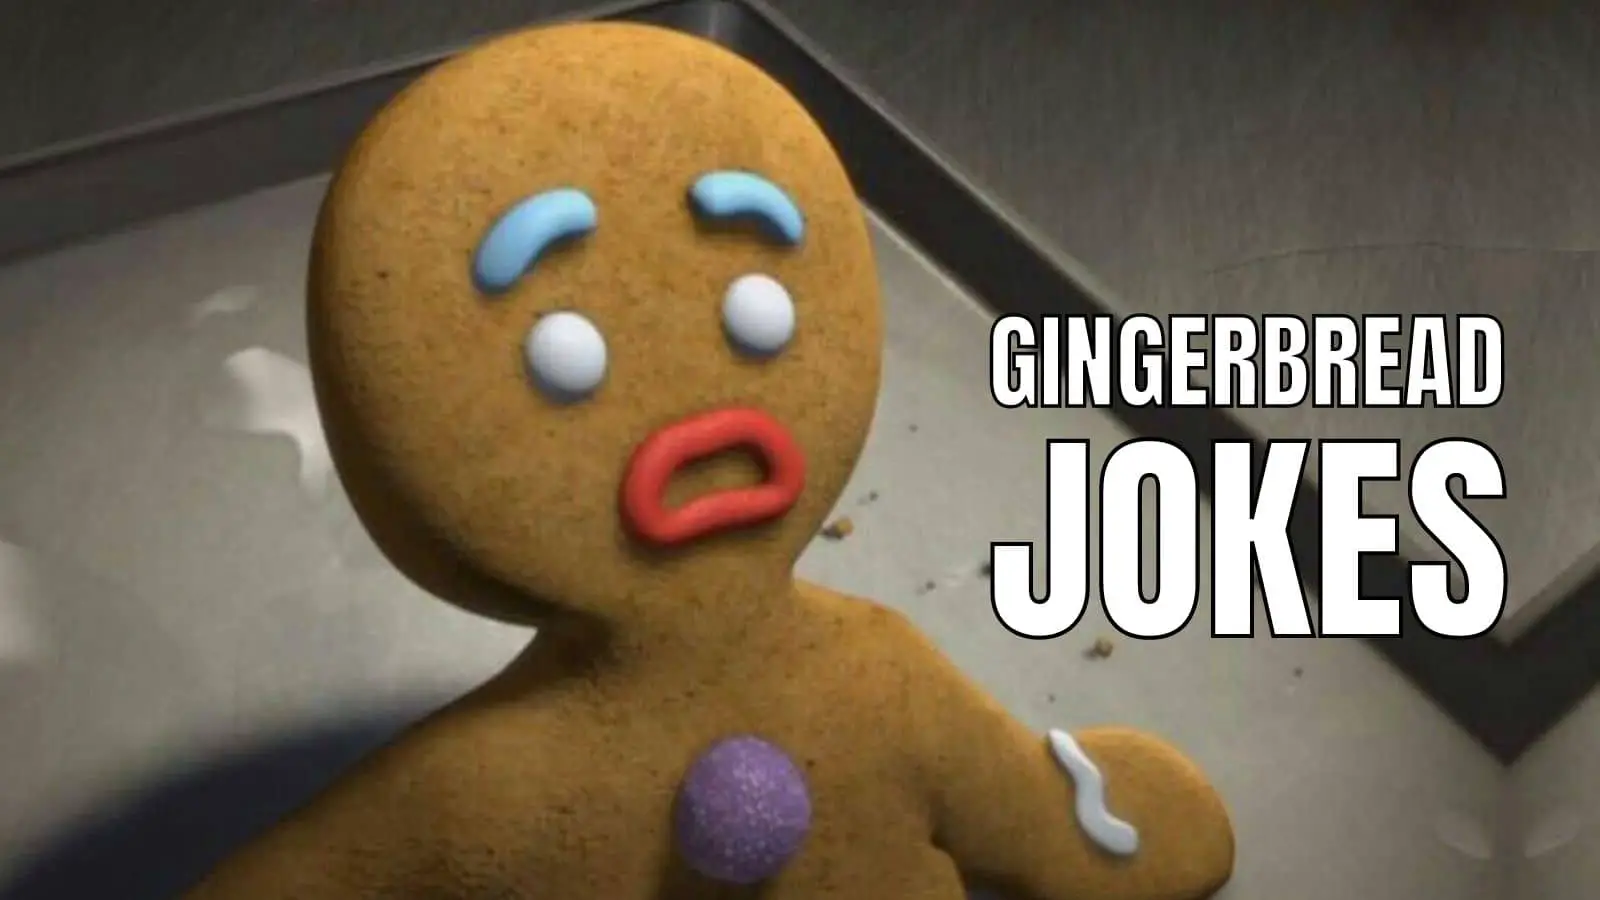 Funny Gingerbread Jokes on Baked Goods